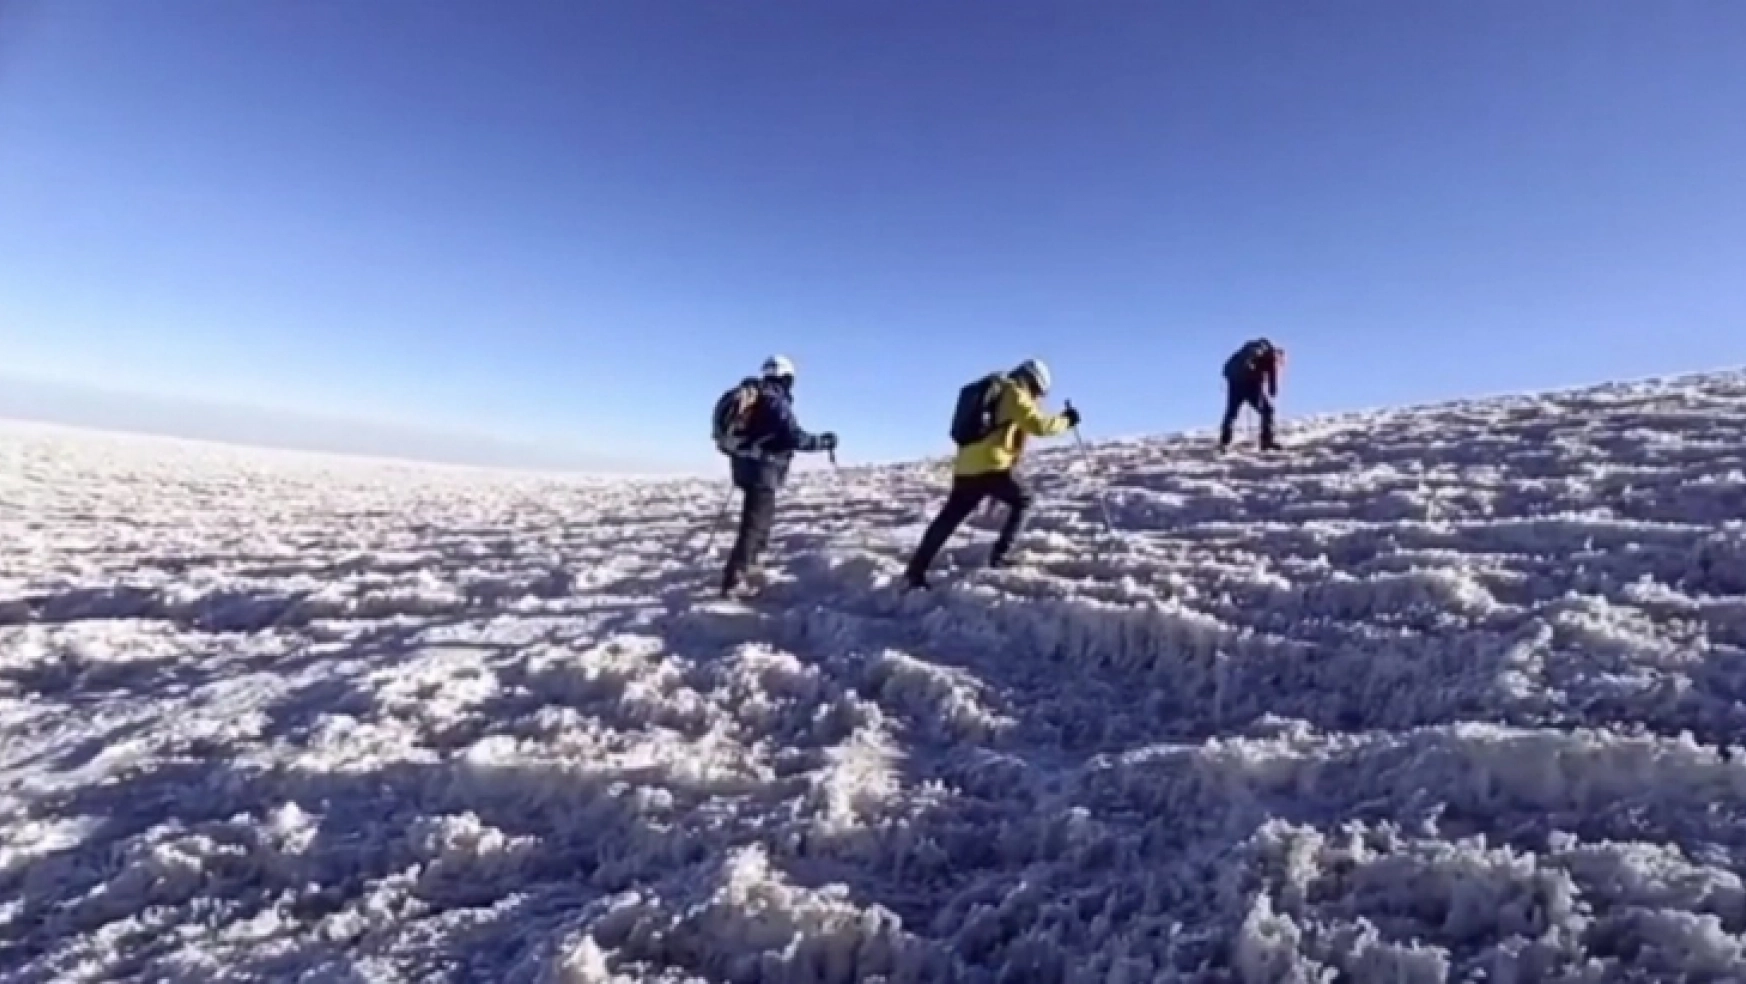 Vanlı dağcılar 1 ay içerisinde üçüncü kez Ağrı Dağı'na tırmandı